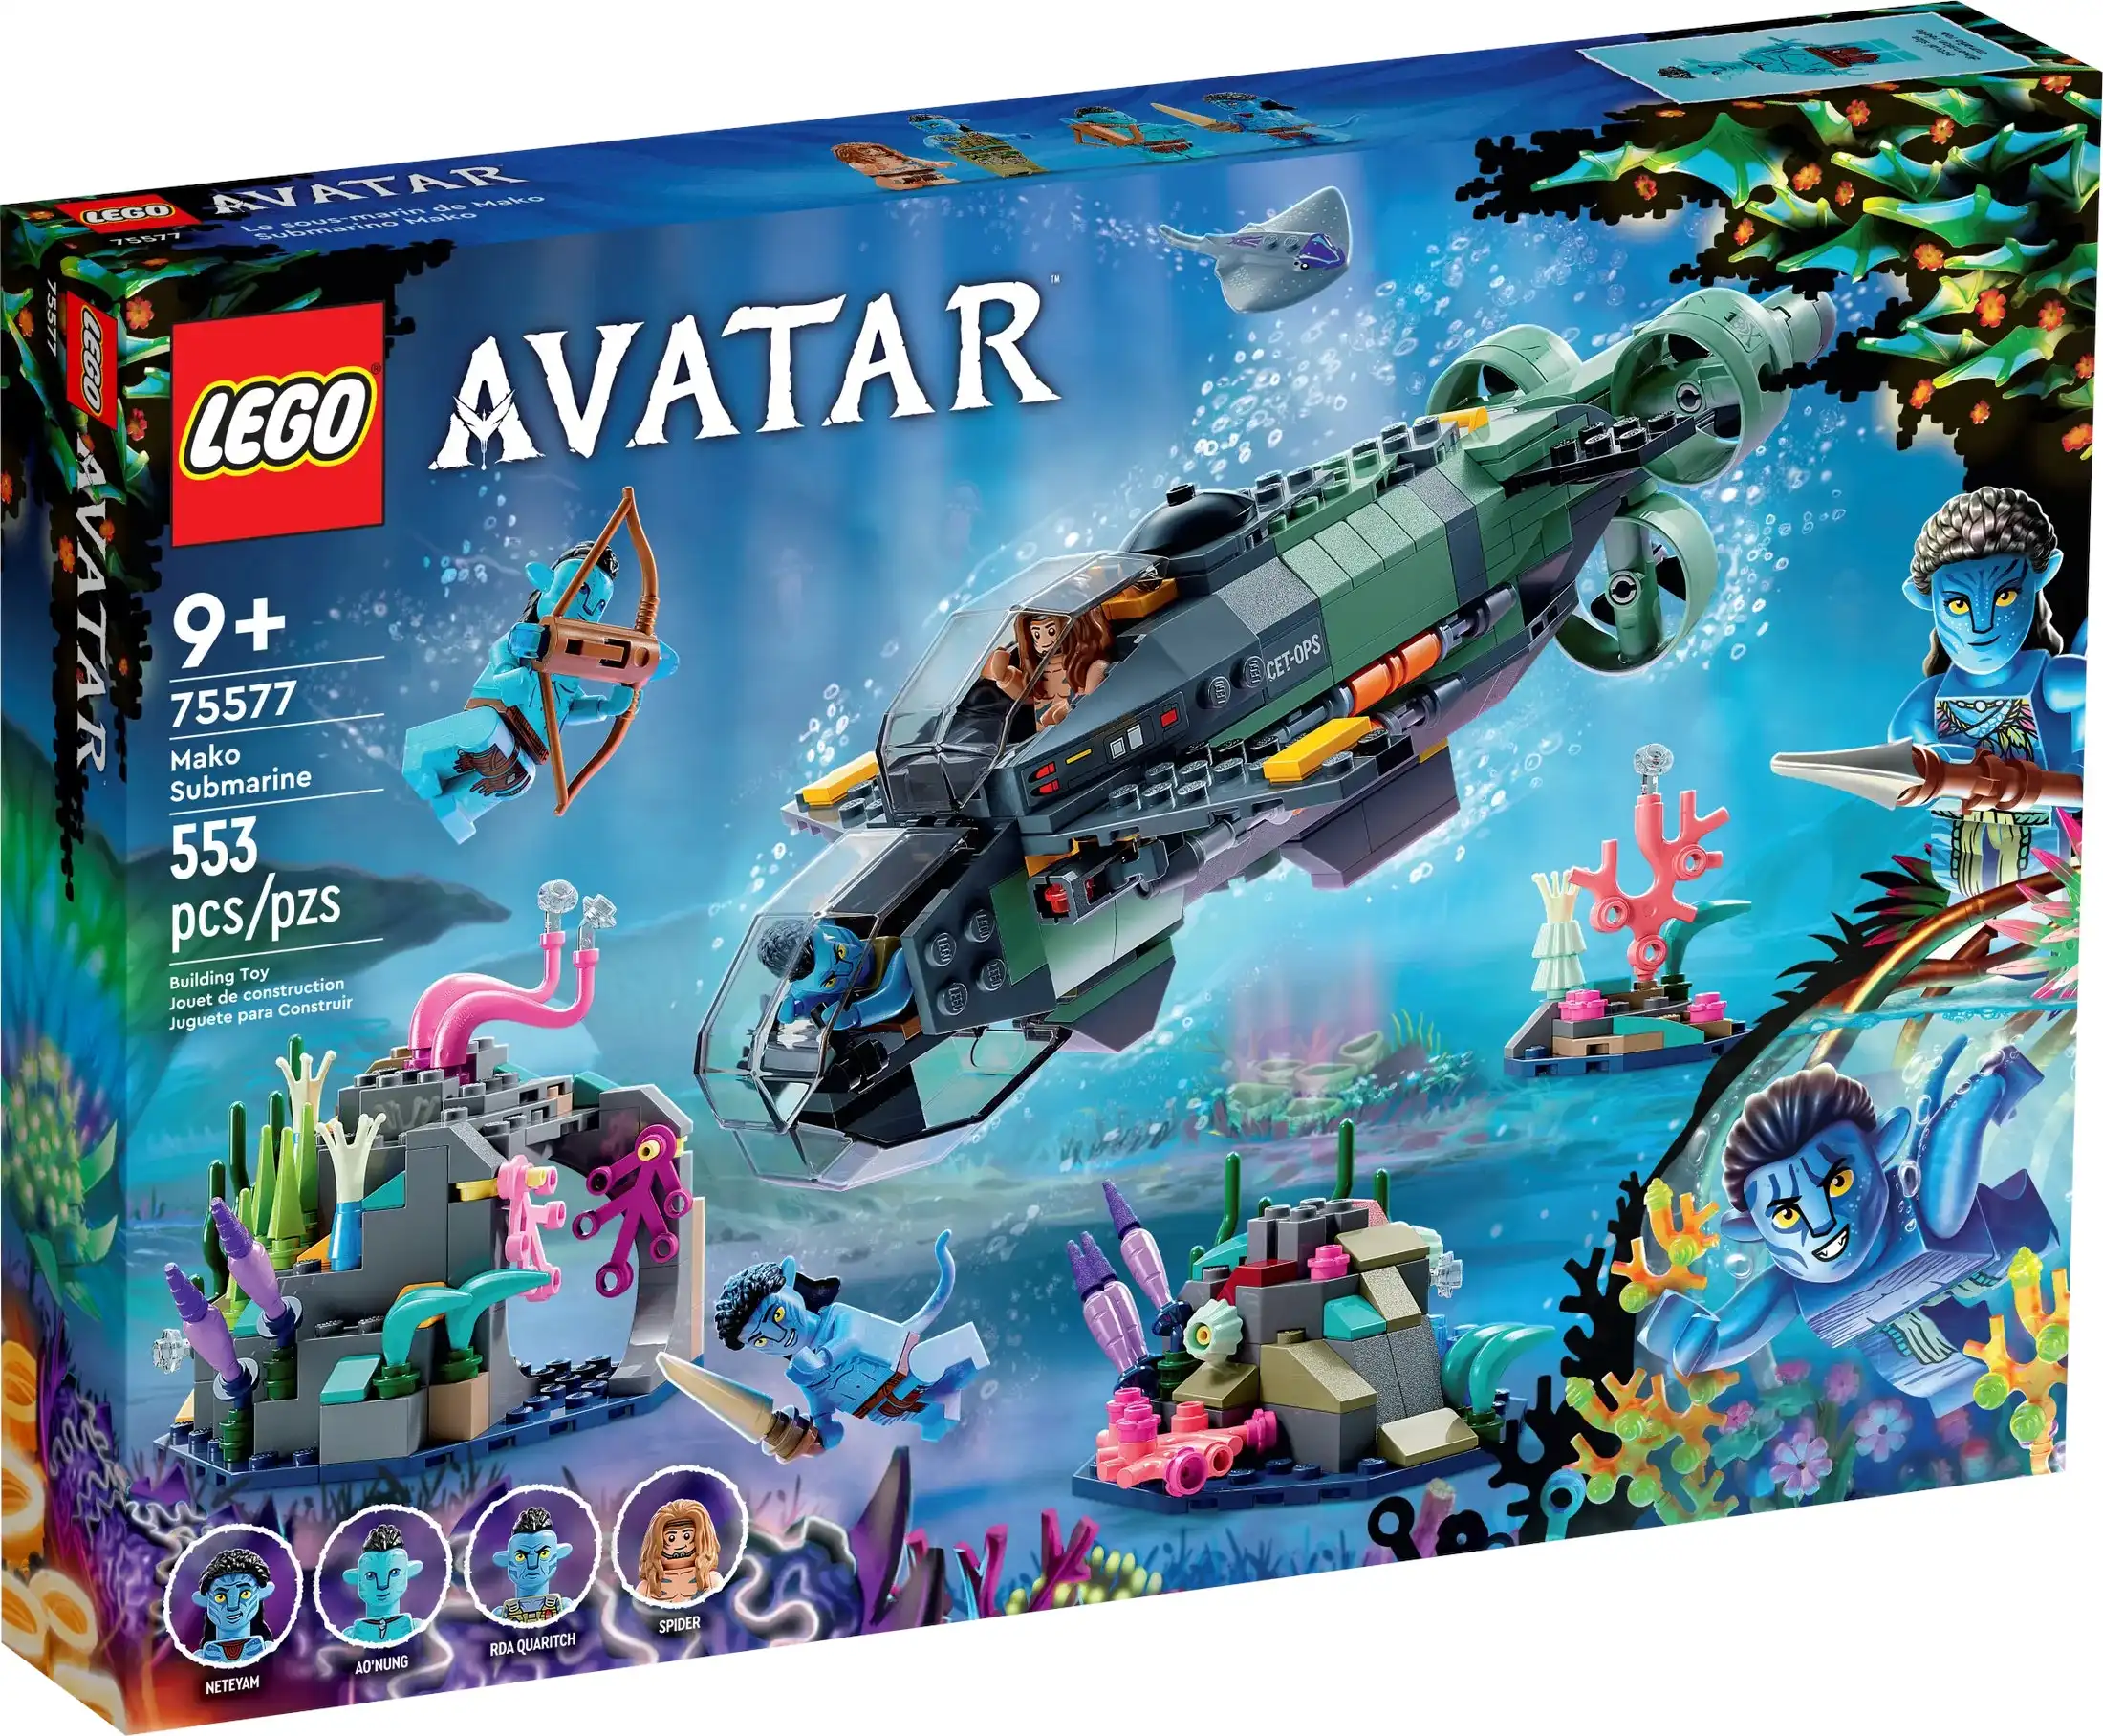 LEGO 75577 Mako Submarine - Avatar